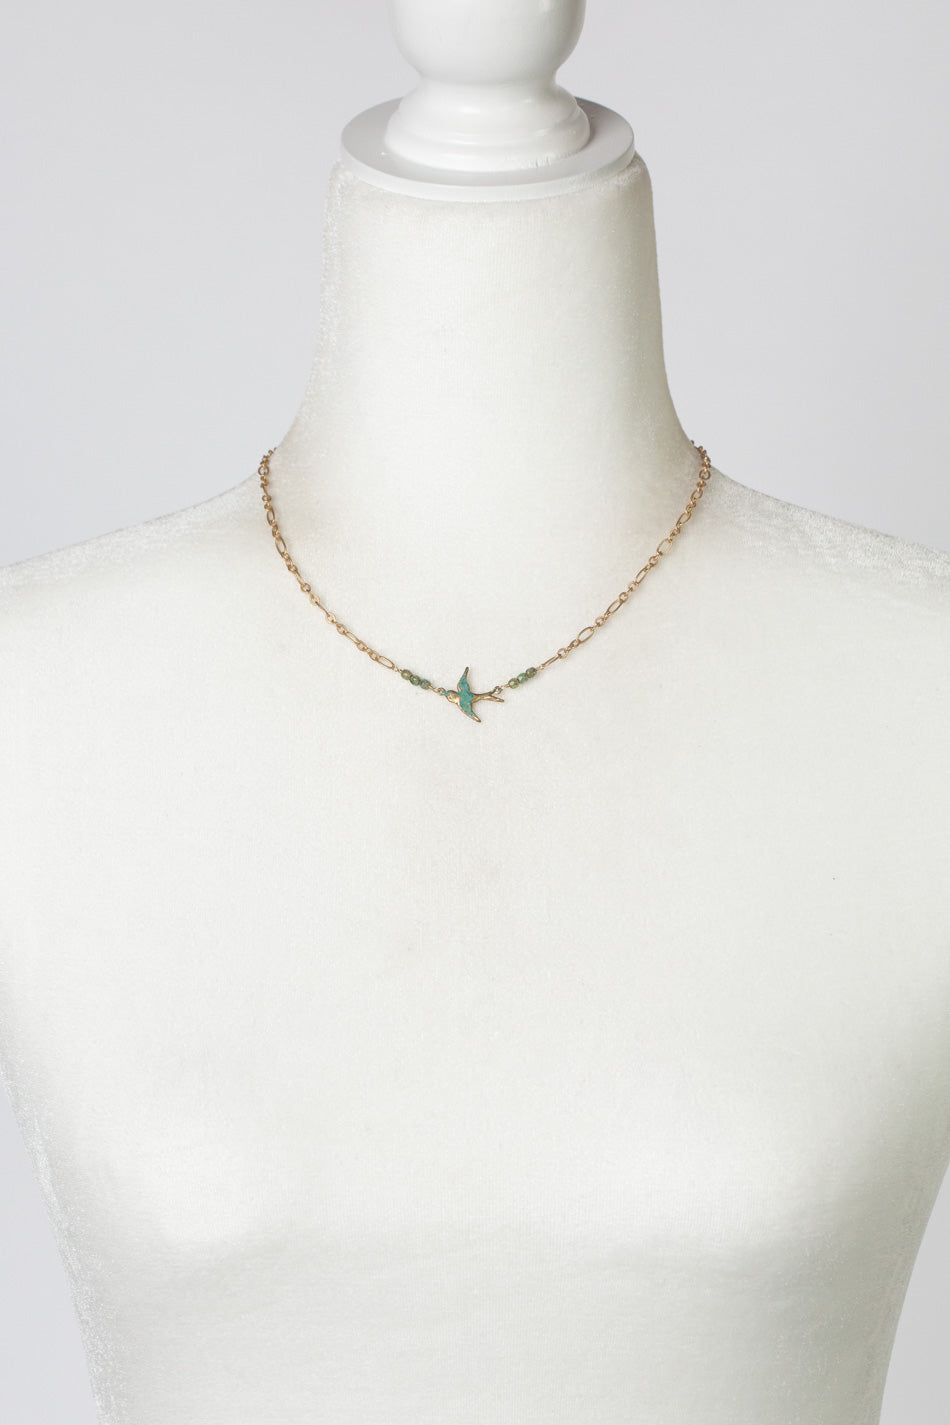 Heron 16-18" Czech Glass, Patina Bird Focal Necklace